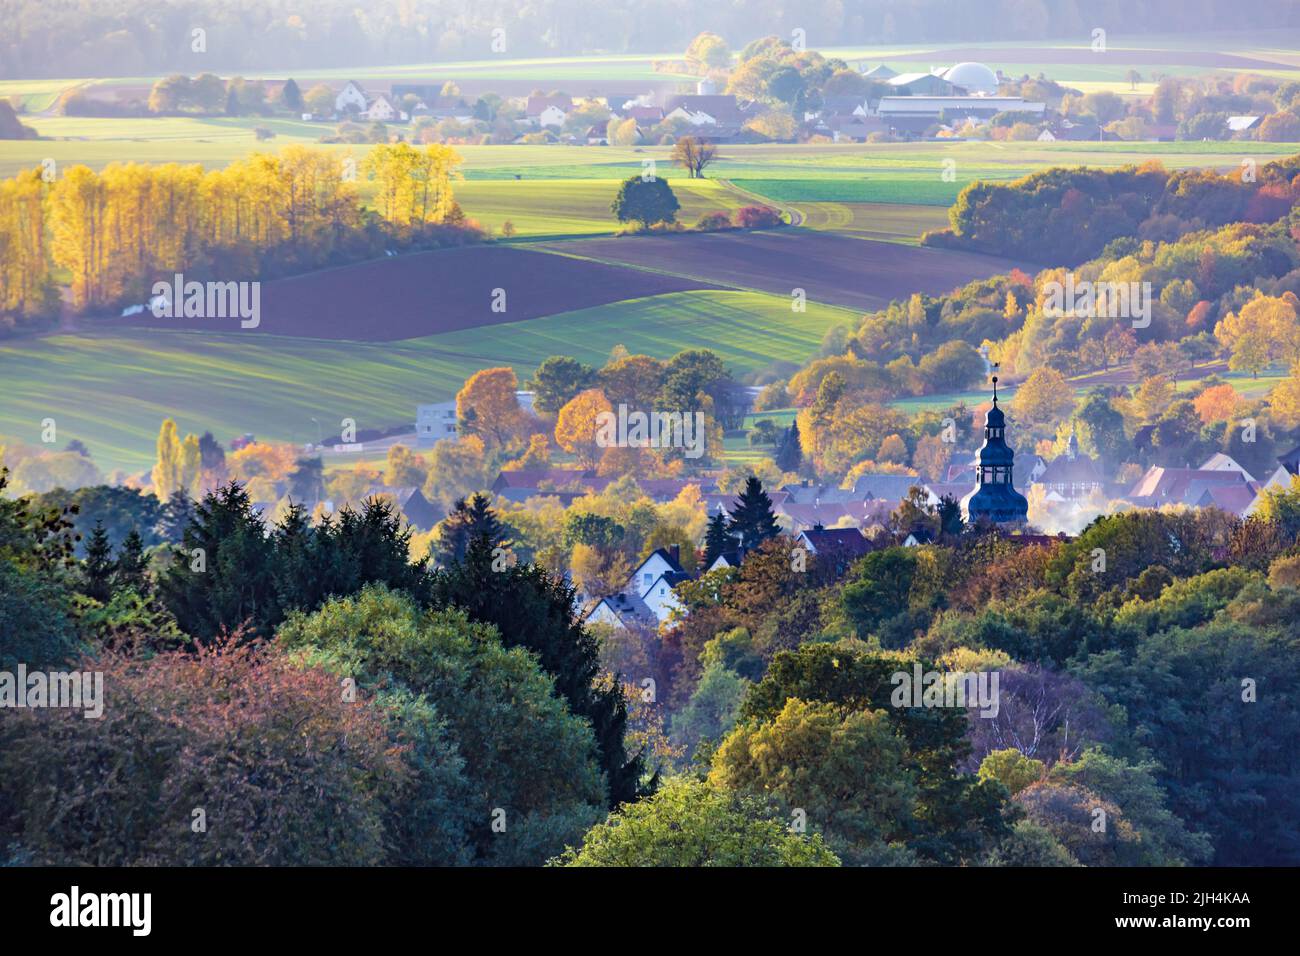 Autumn Rural Landscape near Coburg, Germany Stock Photo